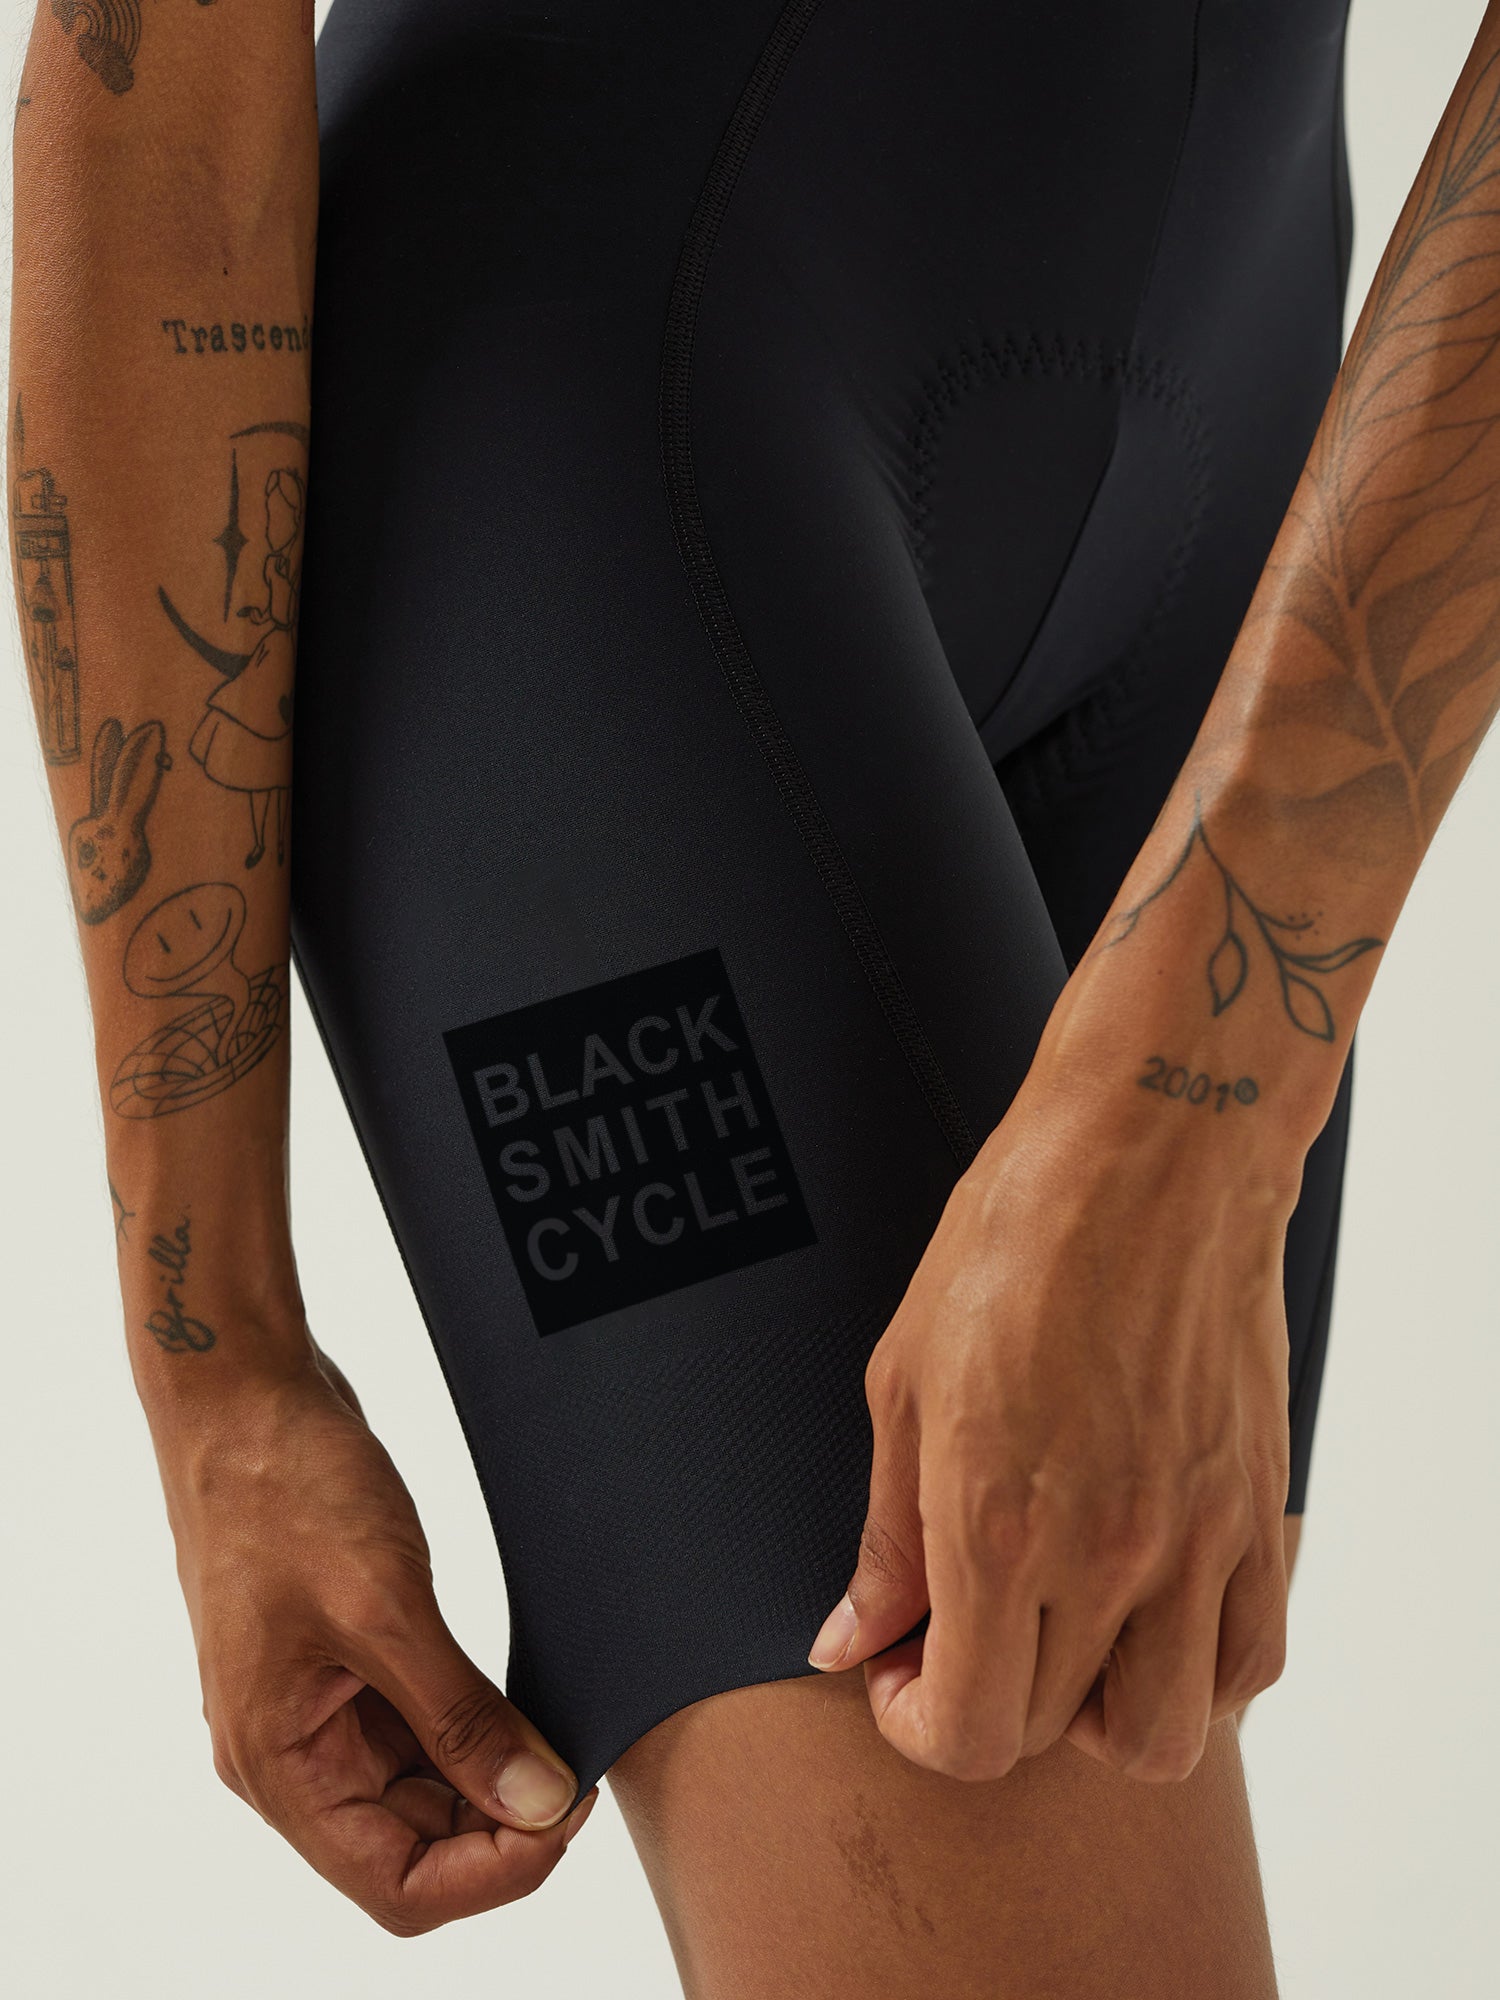 B.Harms x Givelo Women&#39;s Lacefly Bib Shorts - Black